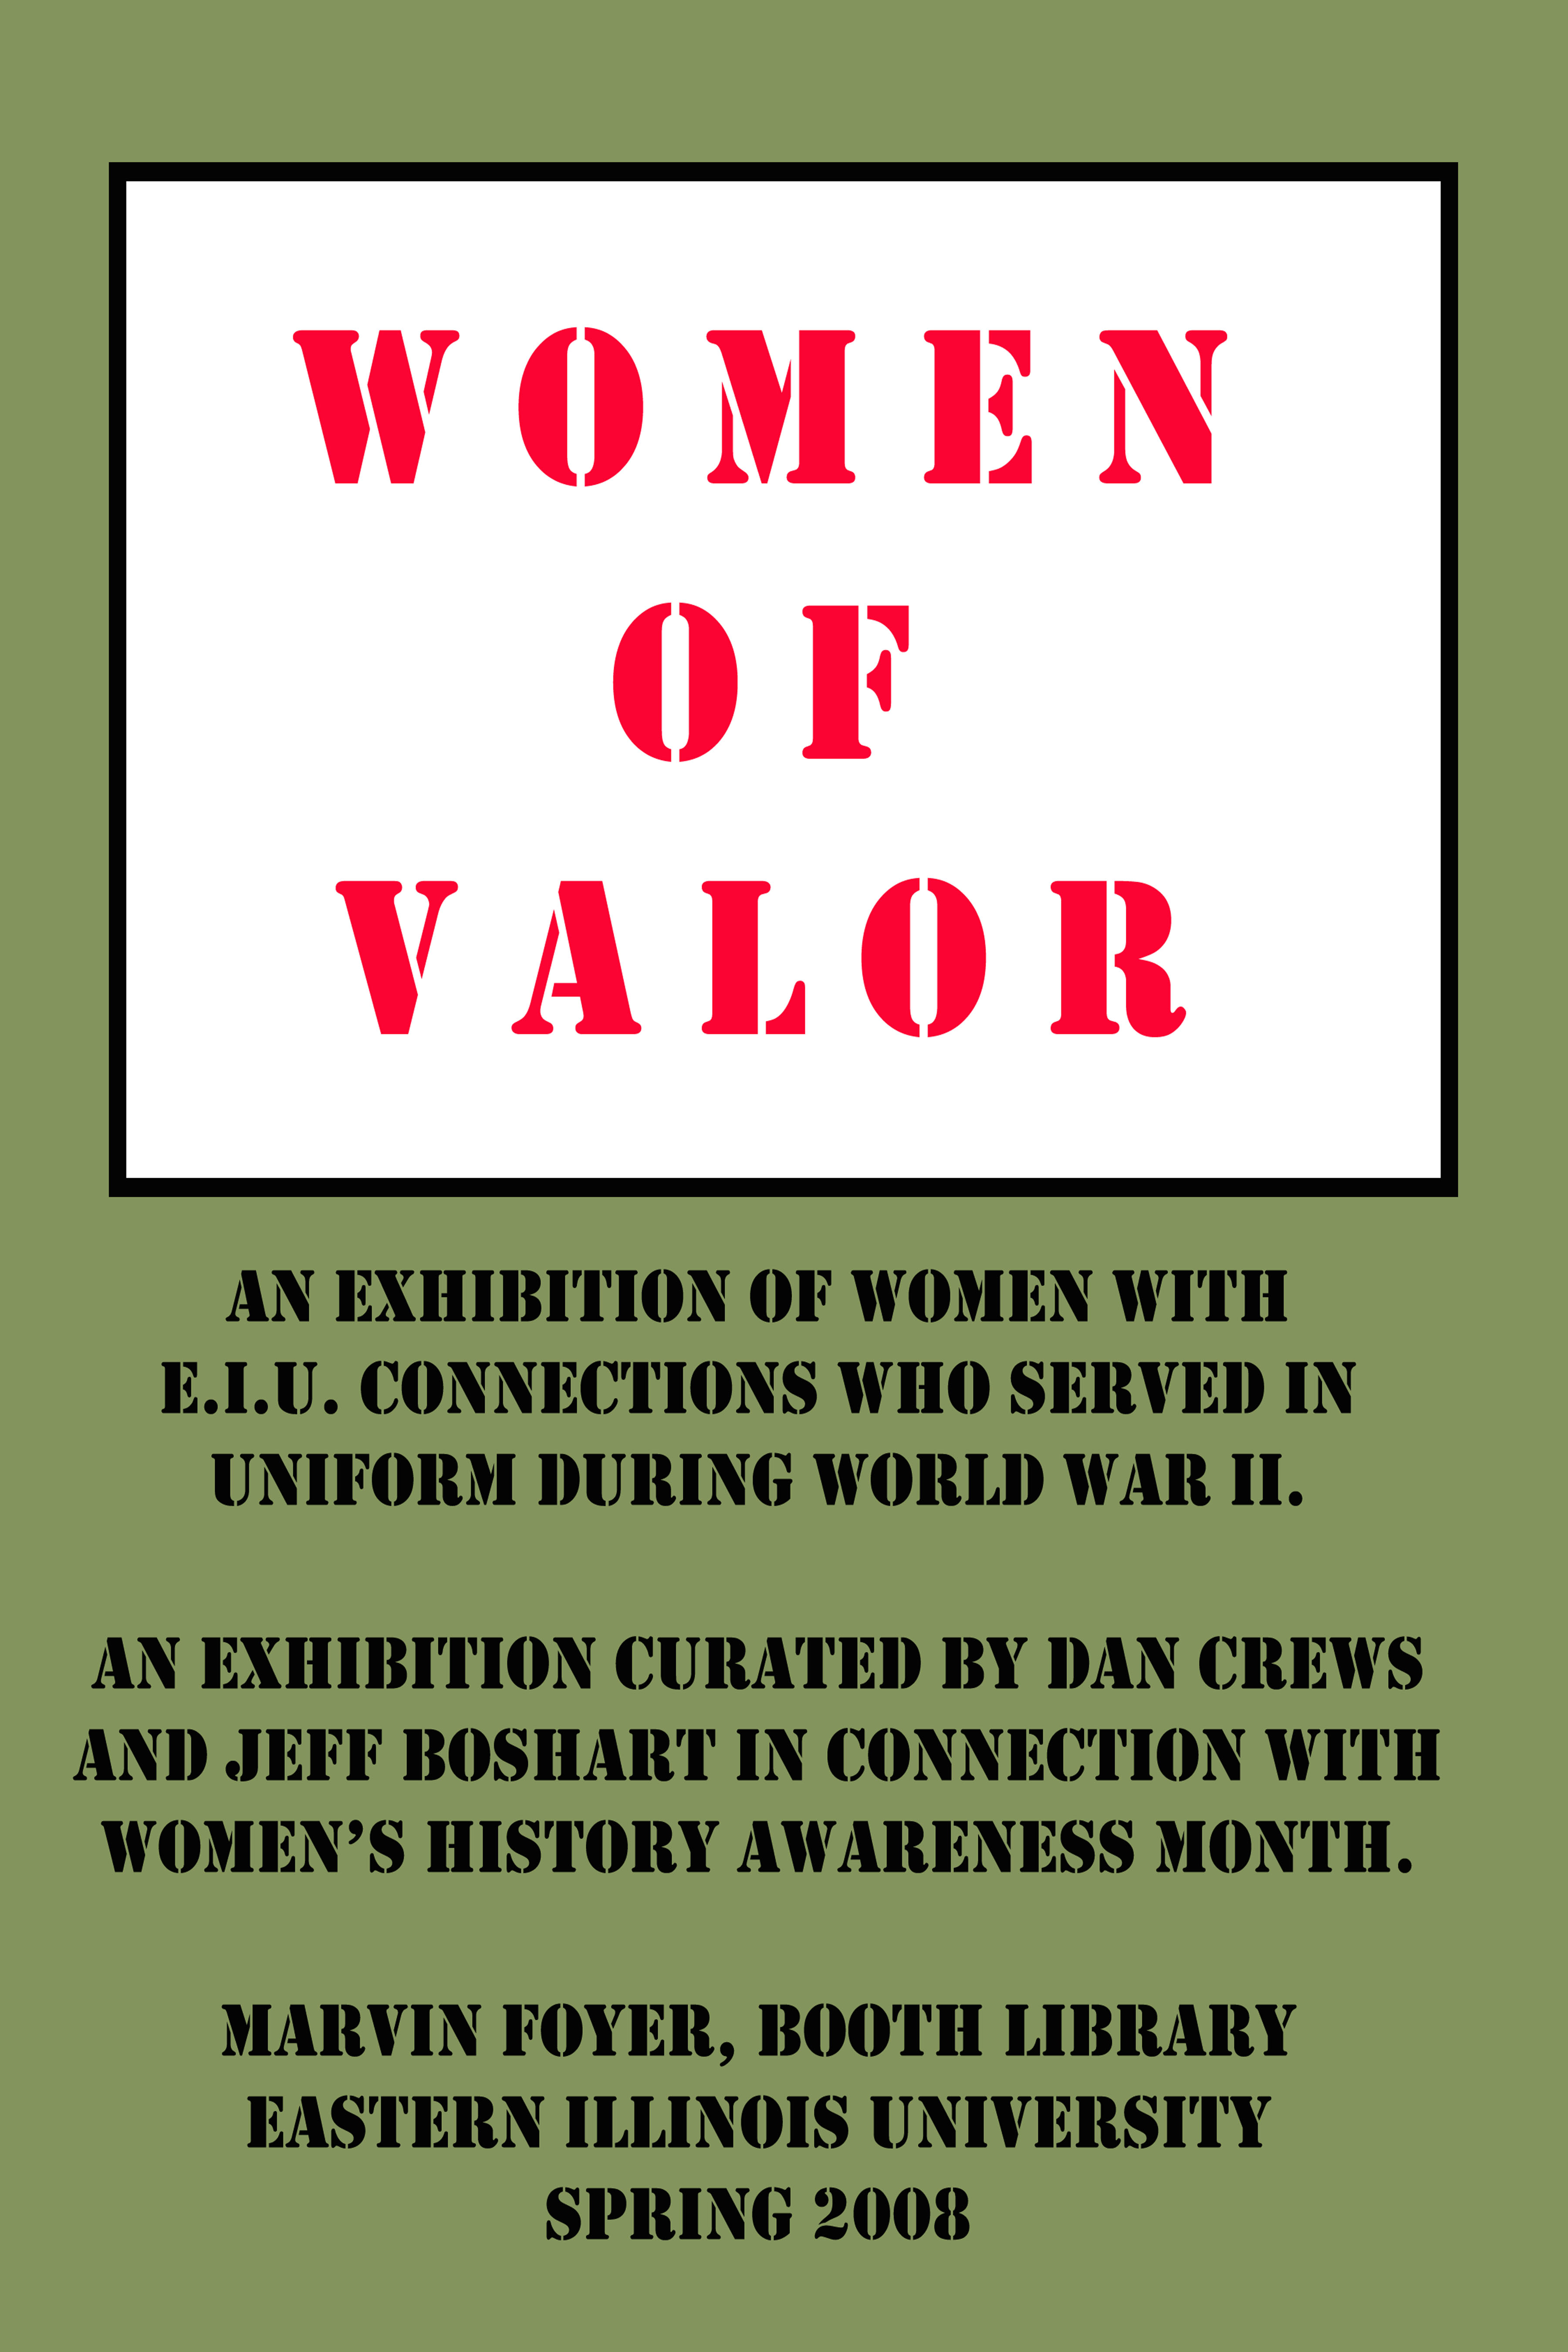 PAI Women of Valor Poster